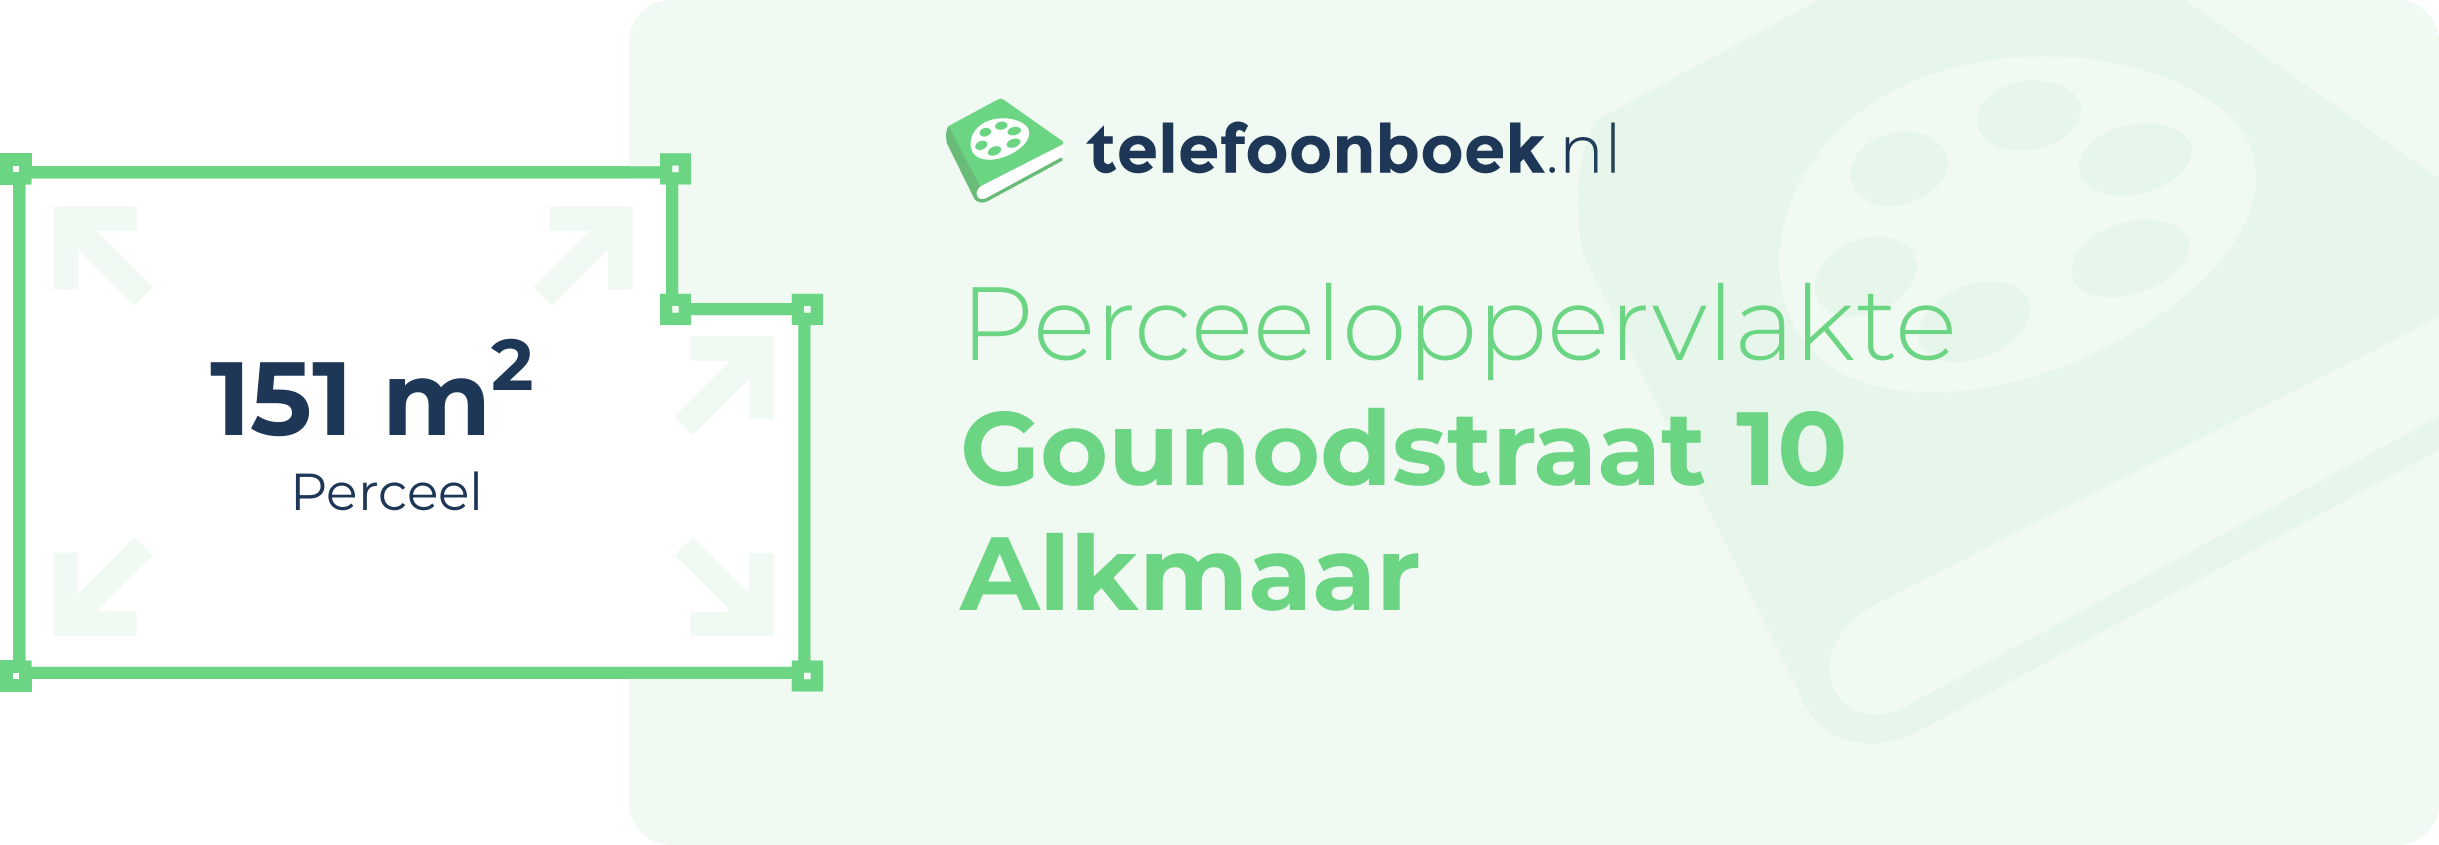 Perceeloppervlakte Gounodstraat 10 Alkmaar